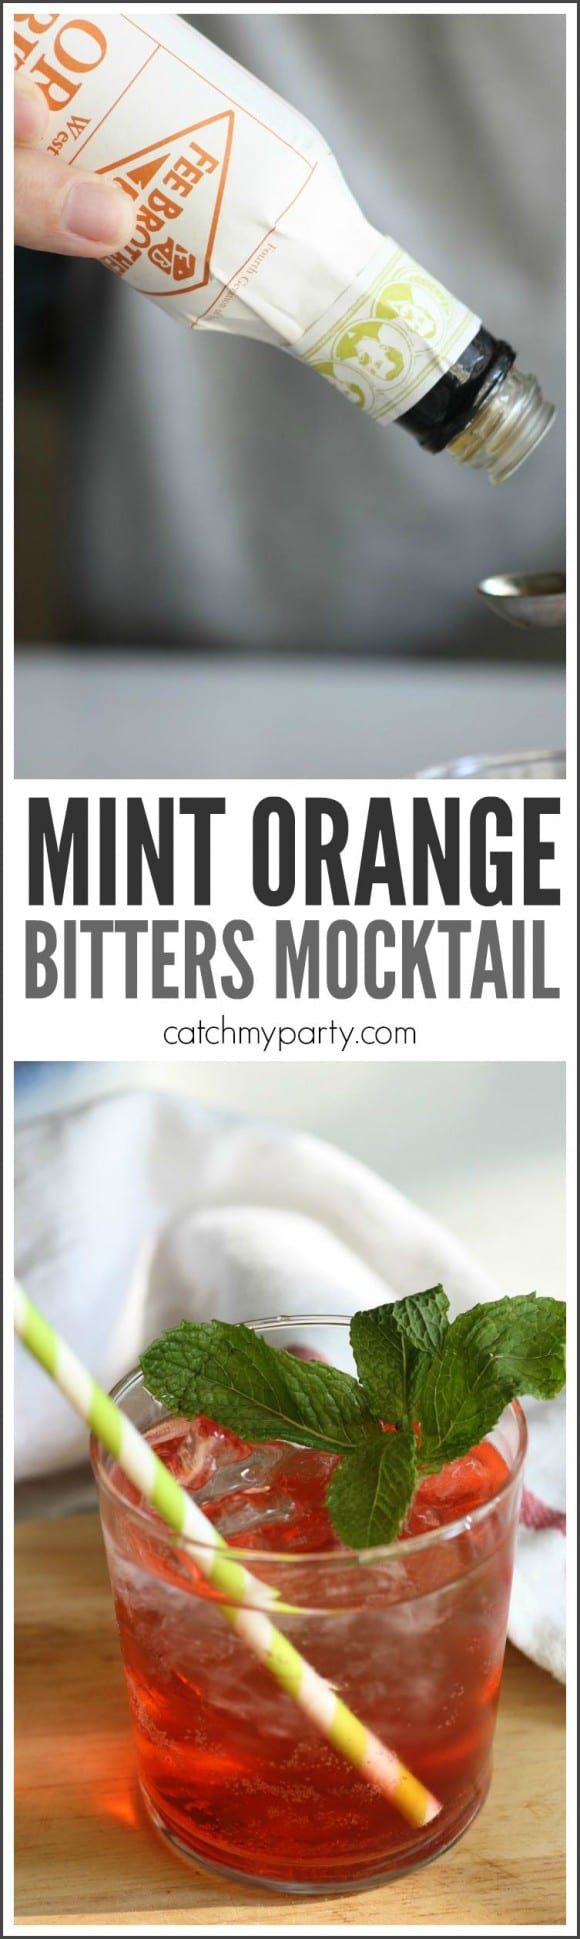 Mint Orange Bitters Mocktail Recipe | CatchMyParty.com